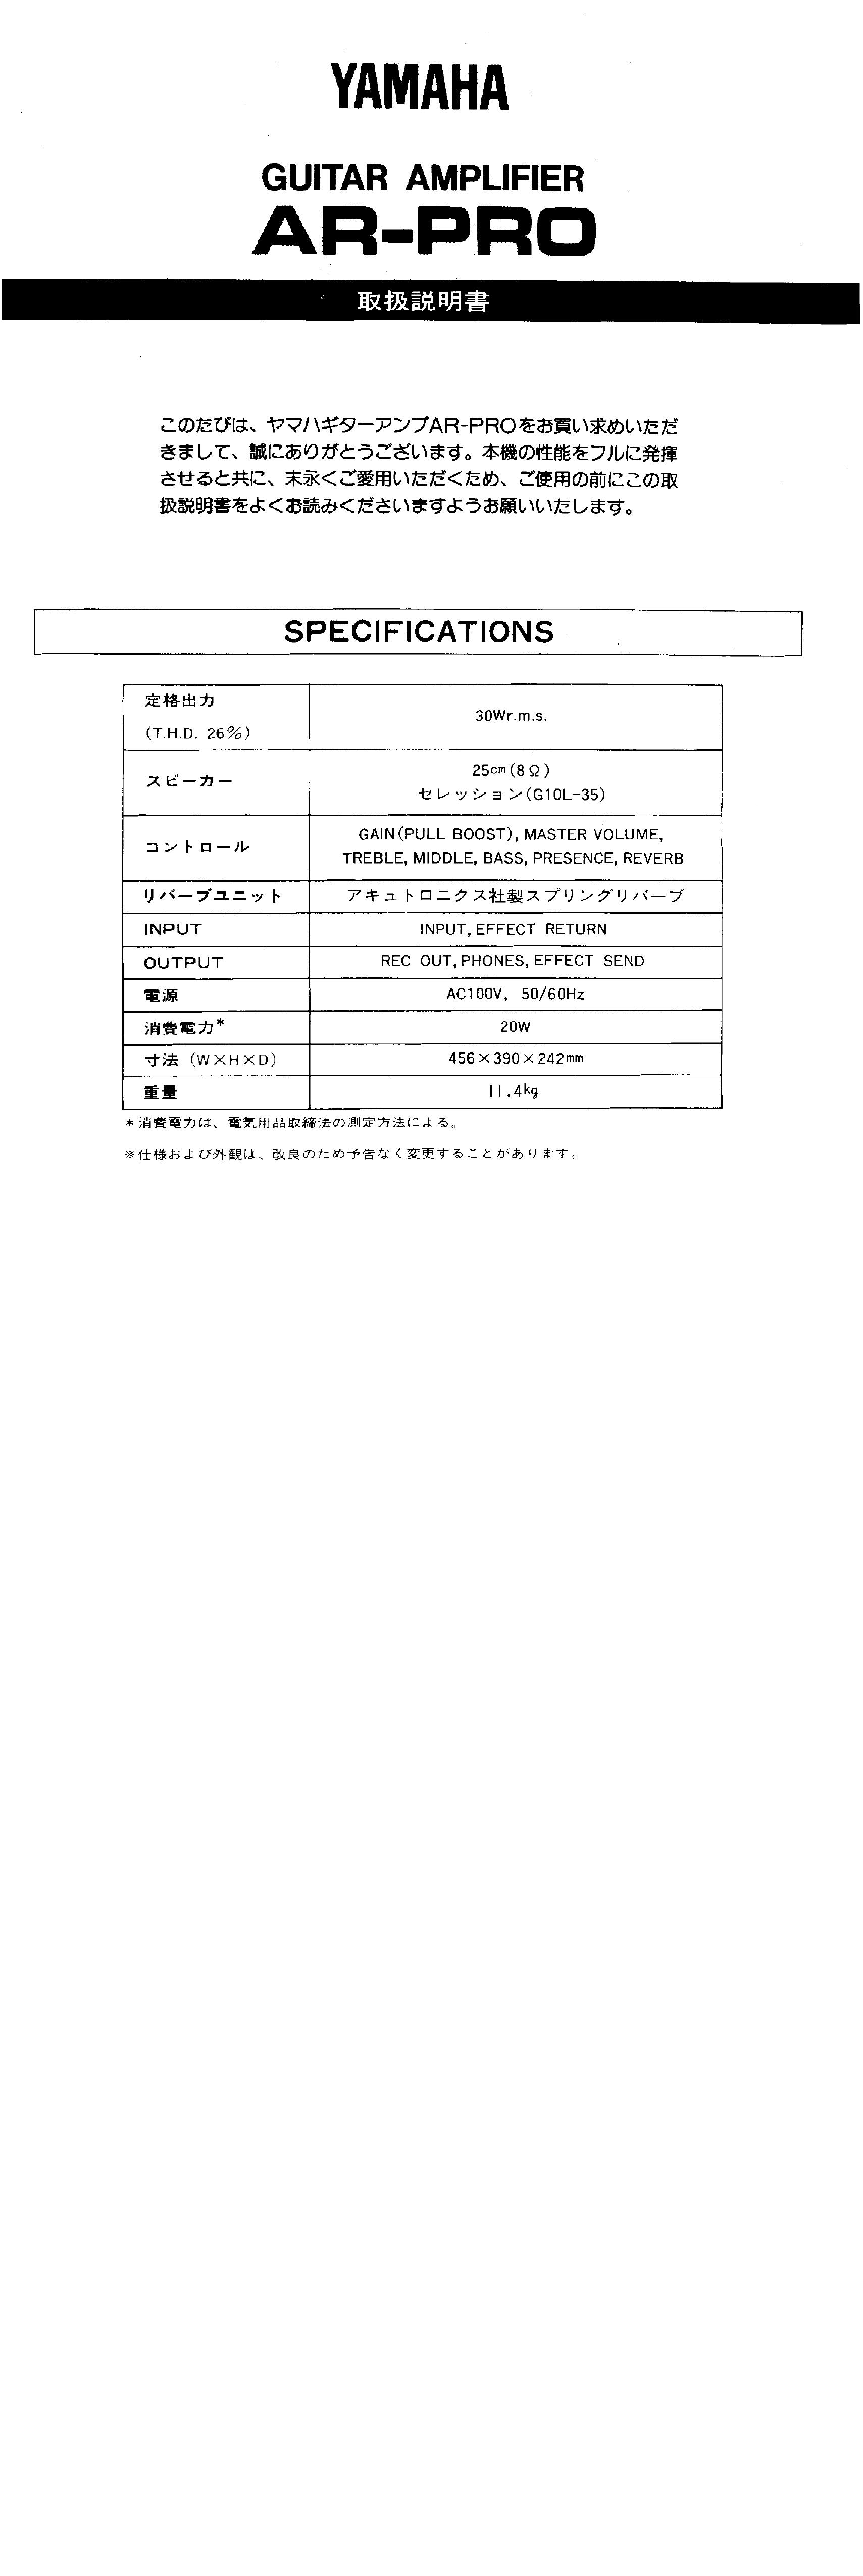 Yamaha AR-PRO Musical Instrument Amplifier User Manual